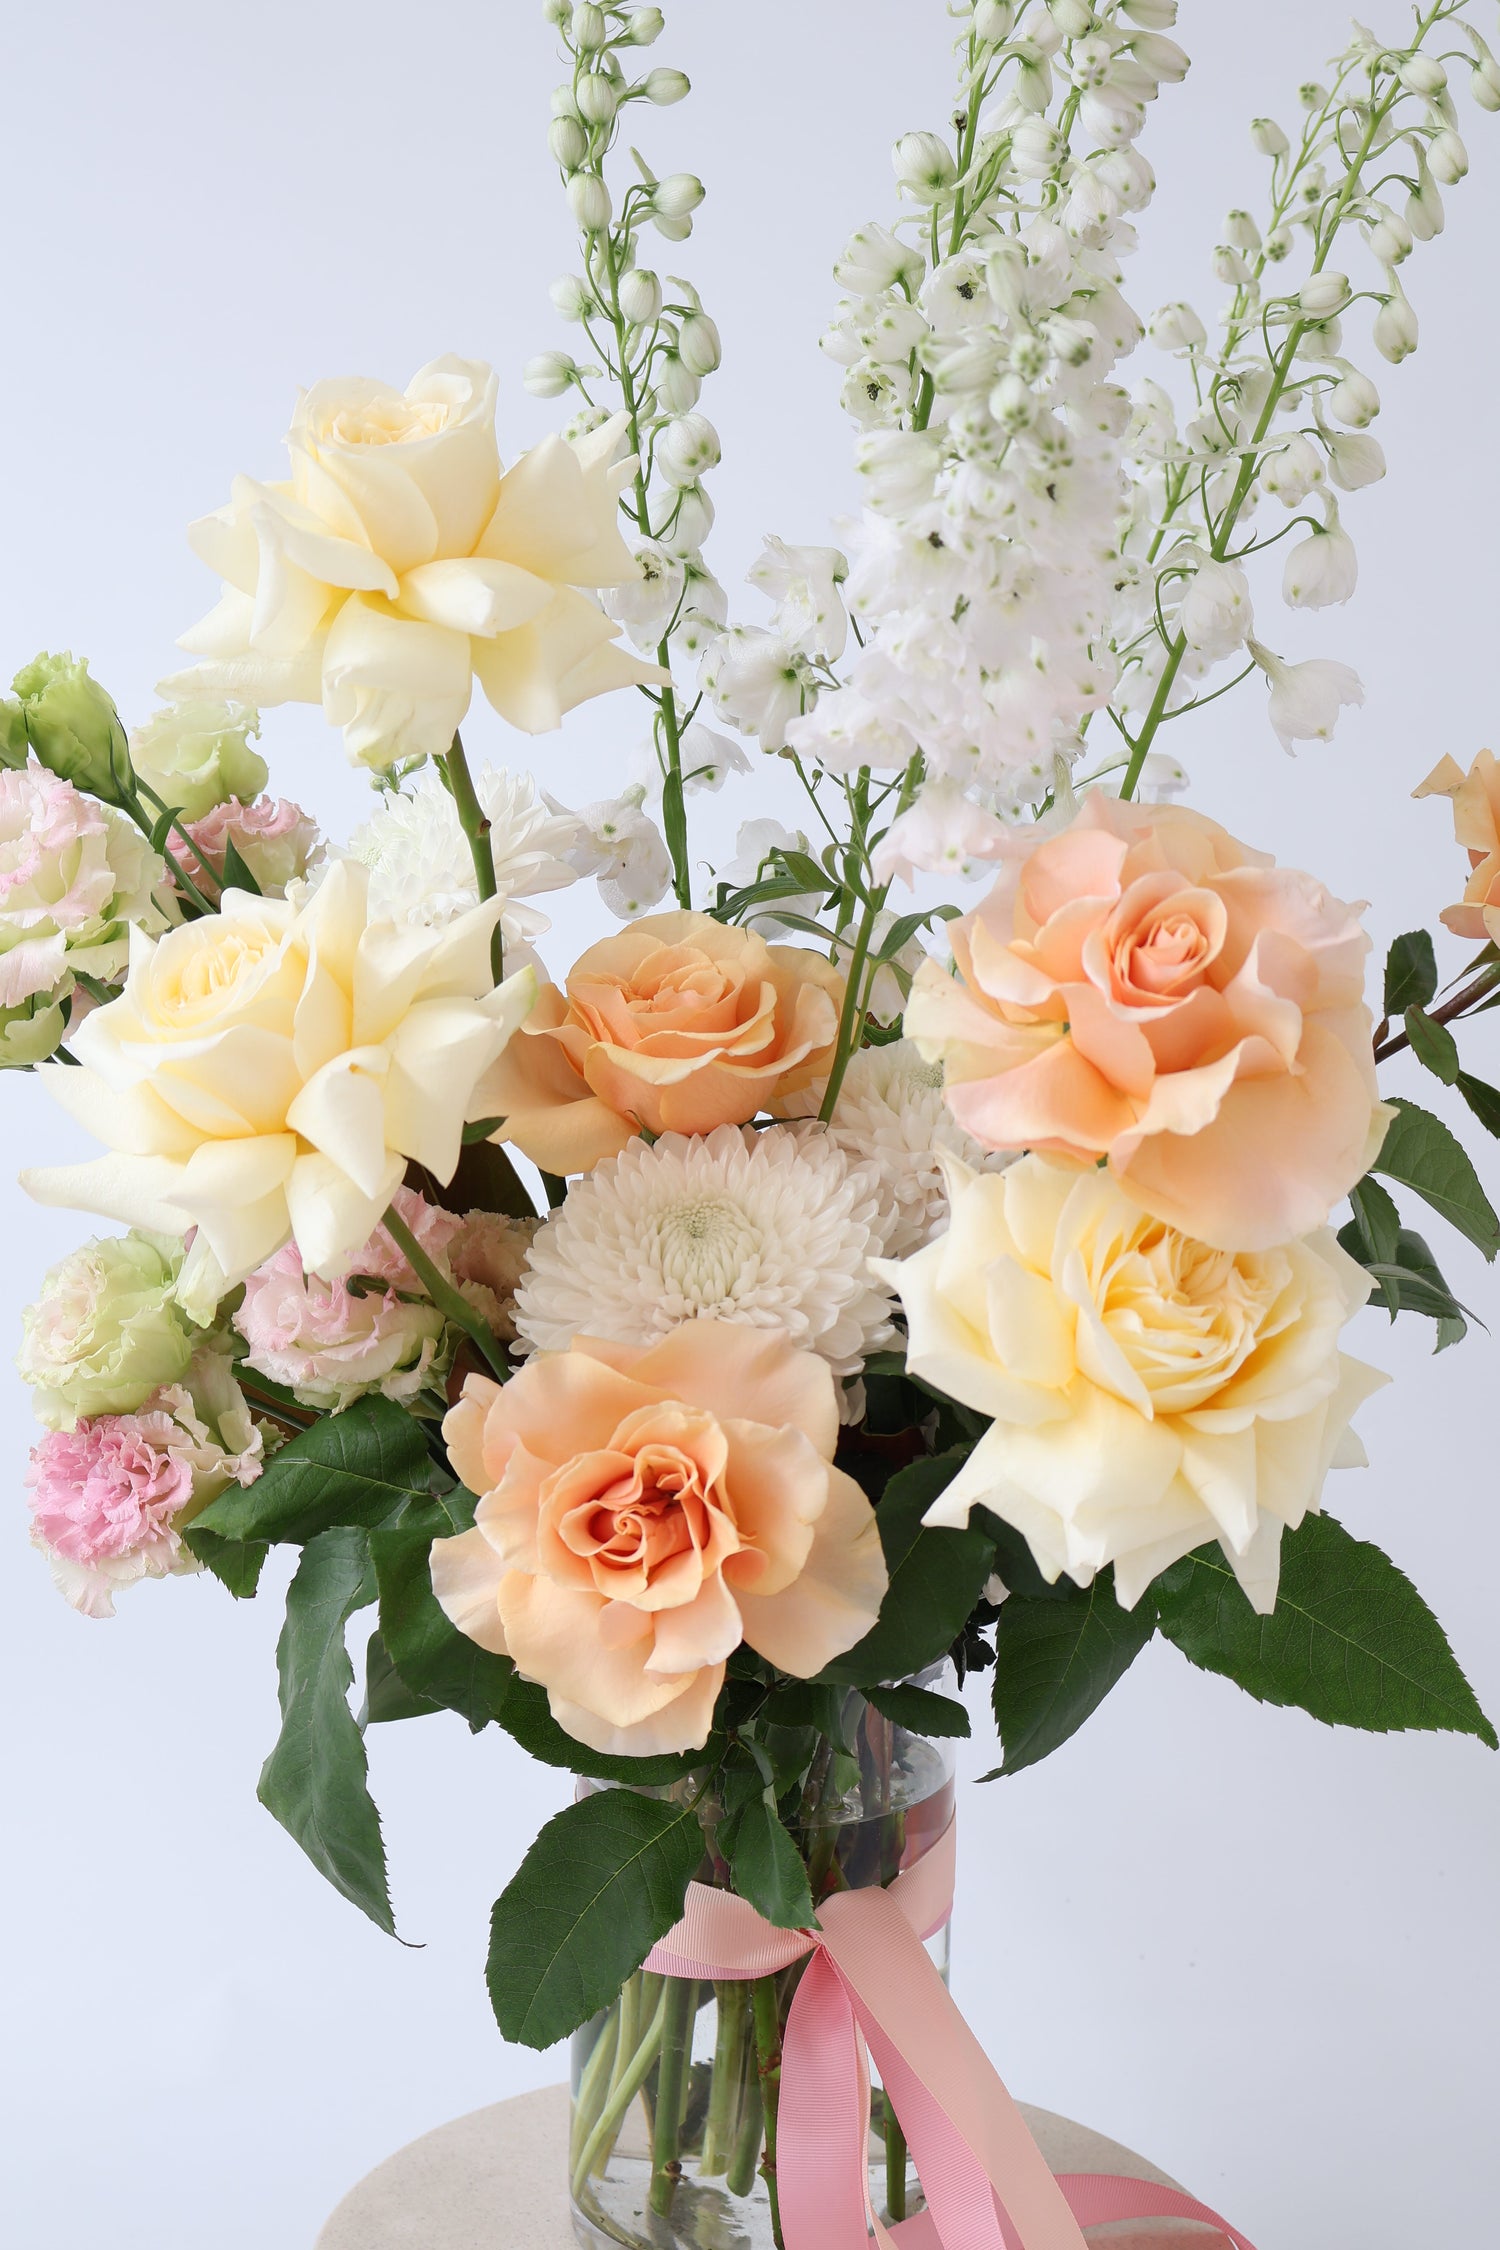 A deluxe fresh flower arrangement in glass vase with Dr Joyful rose and vanilla bath soak.